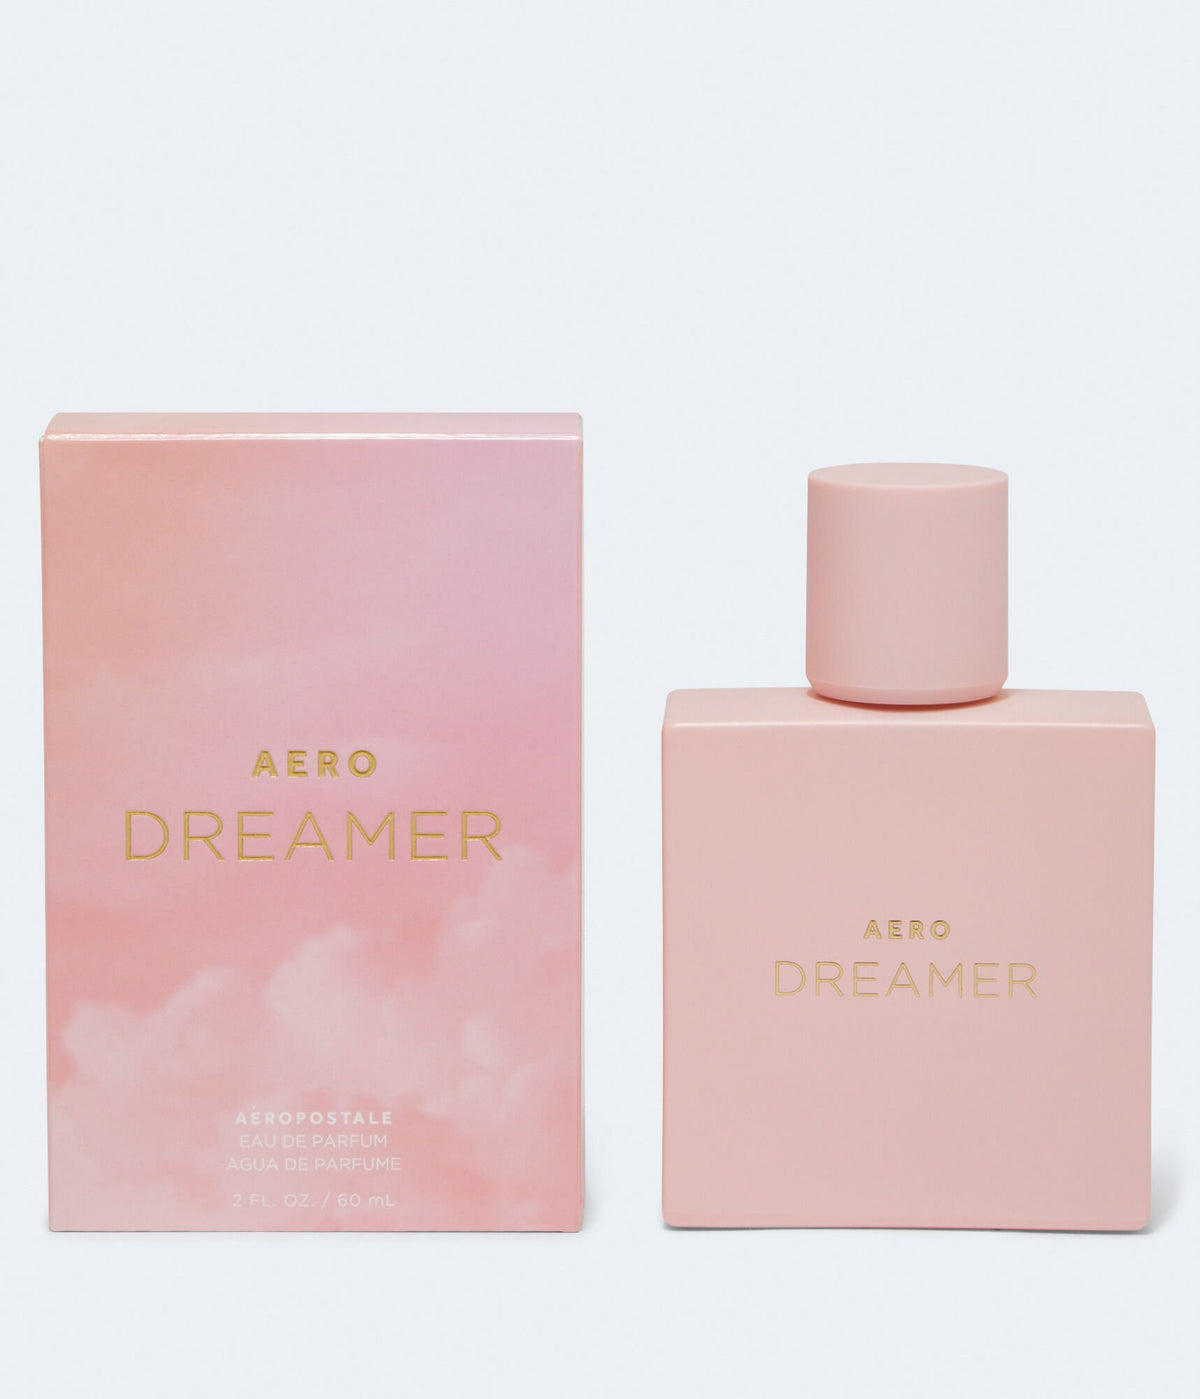 Aeropostale Womens' Dreamer Fragrance - 2 oz - Multi-colored - Size One Size - Glass - Teen Fashion & Clothing Novelty